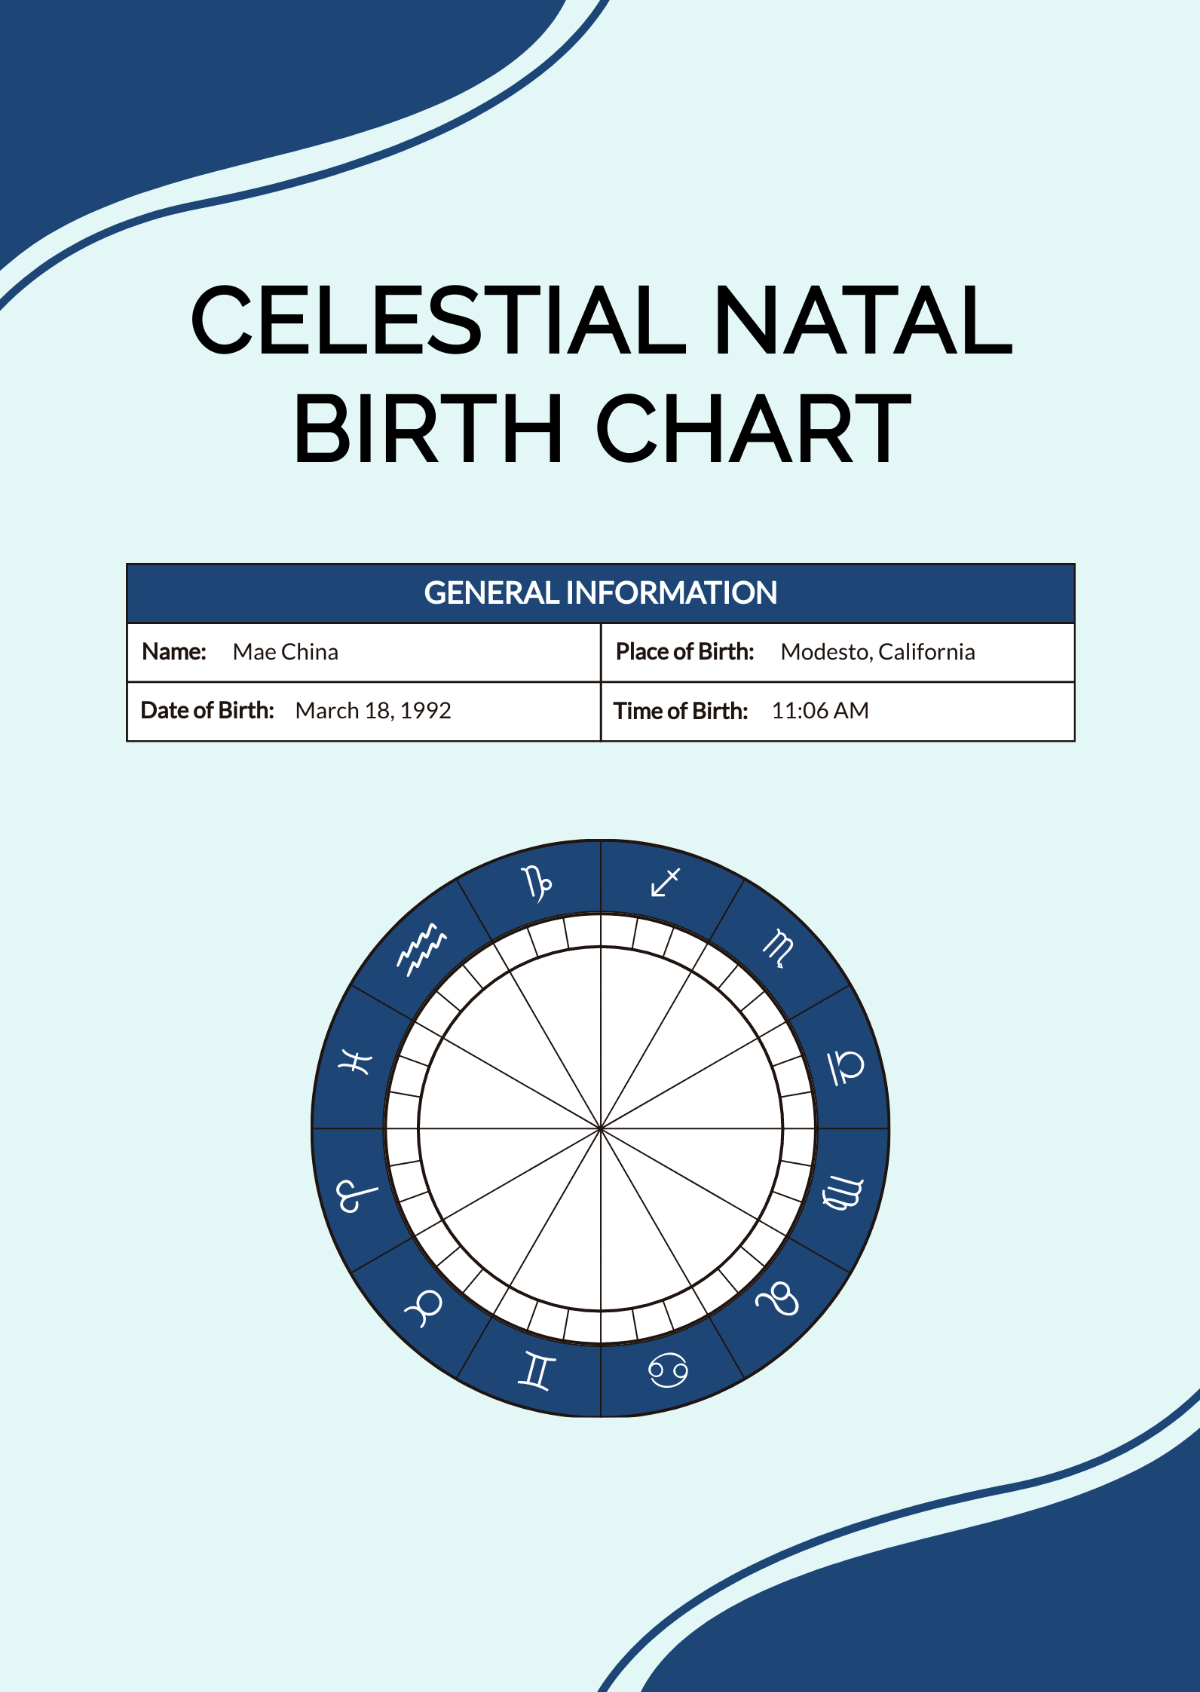 Celestial Natal Birth Chart Template